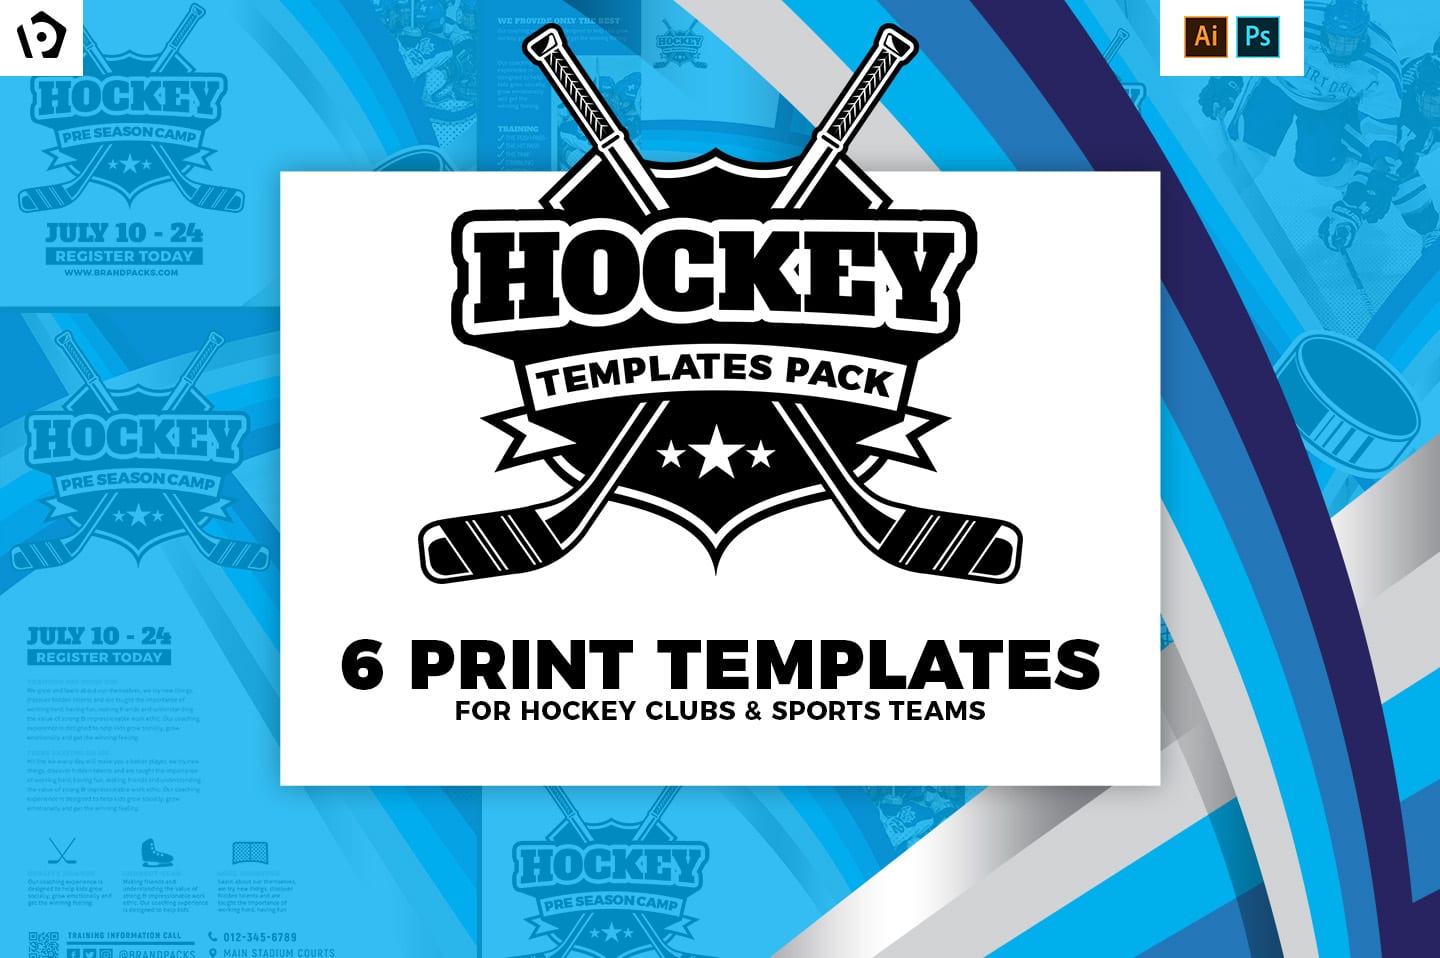 Hockey Club Templates Pack